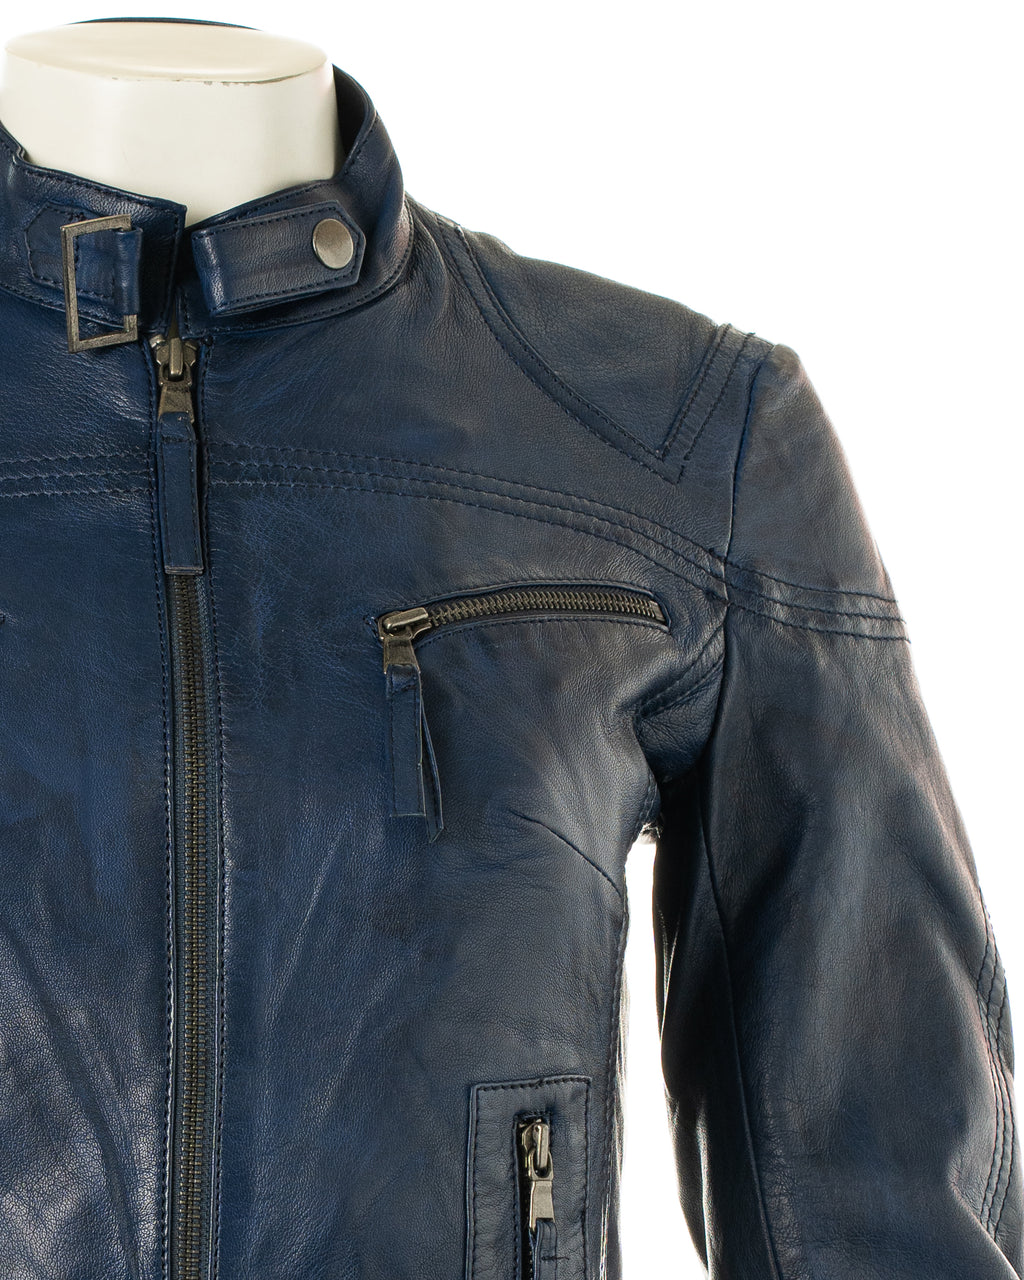 Ladies Deep Blue Buckled Asymmetric Biker Style Leather Jacket: Angelica